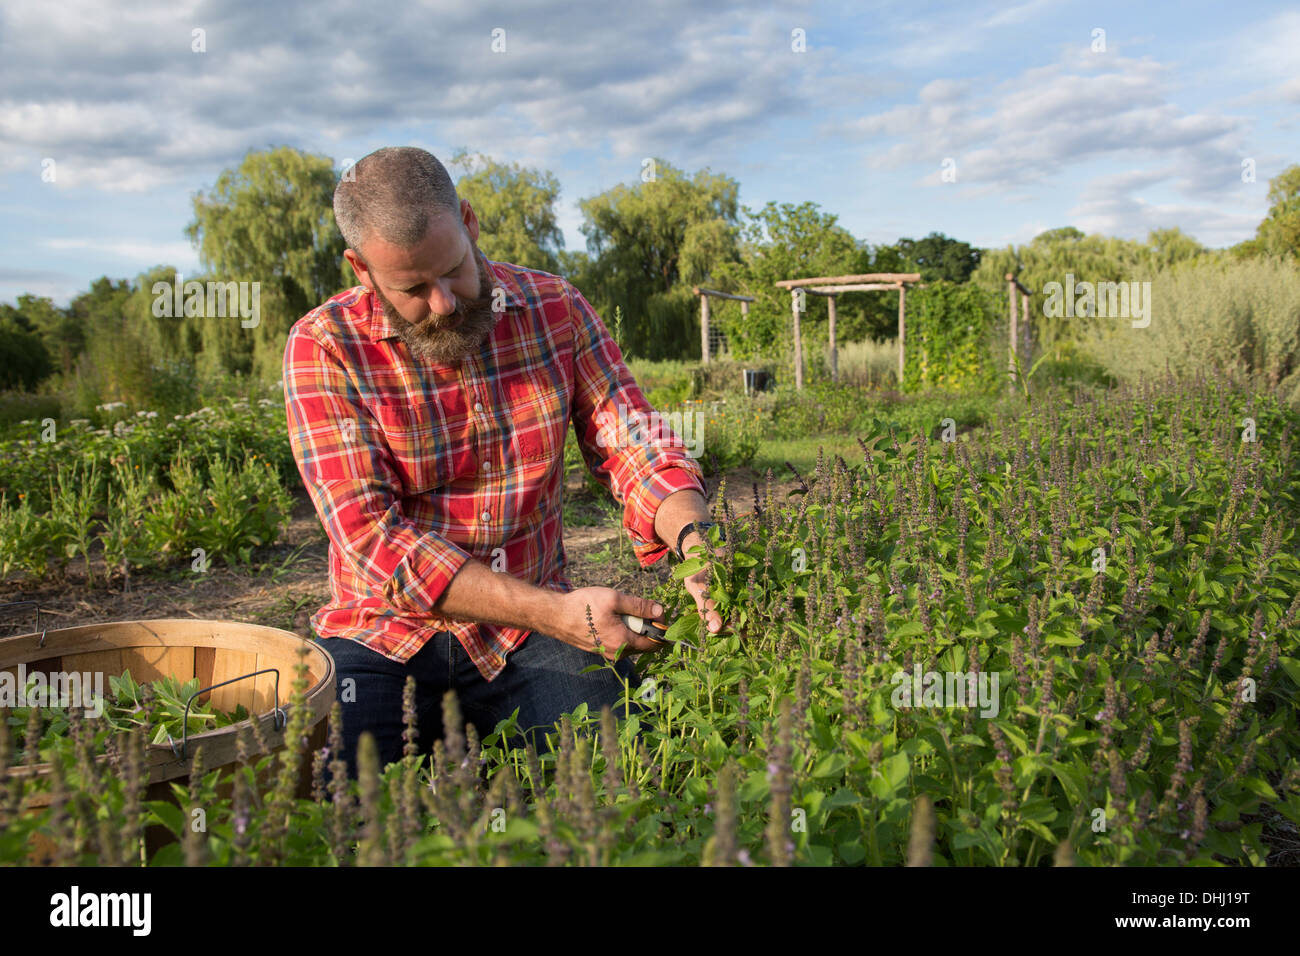 Man on herb farm Banque D'Images